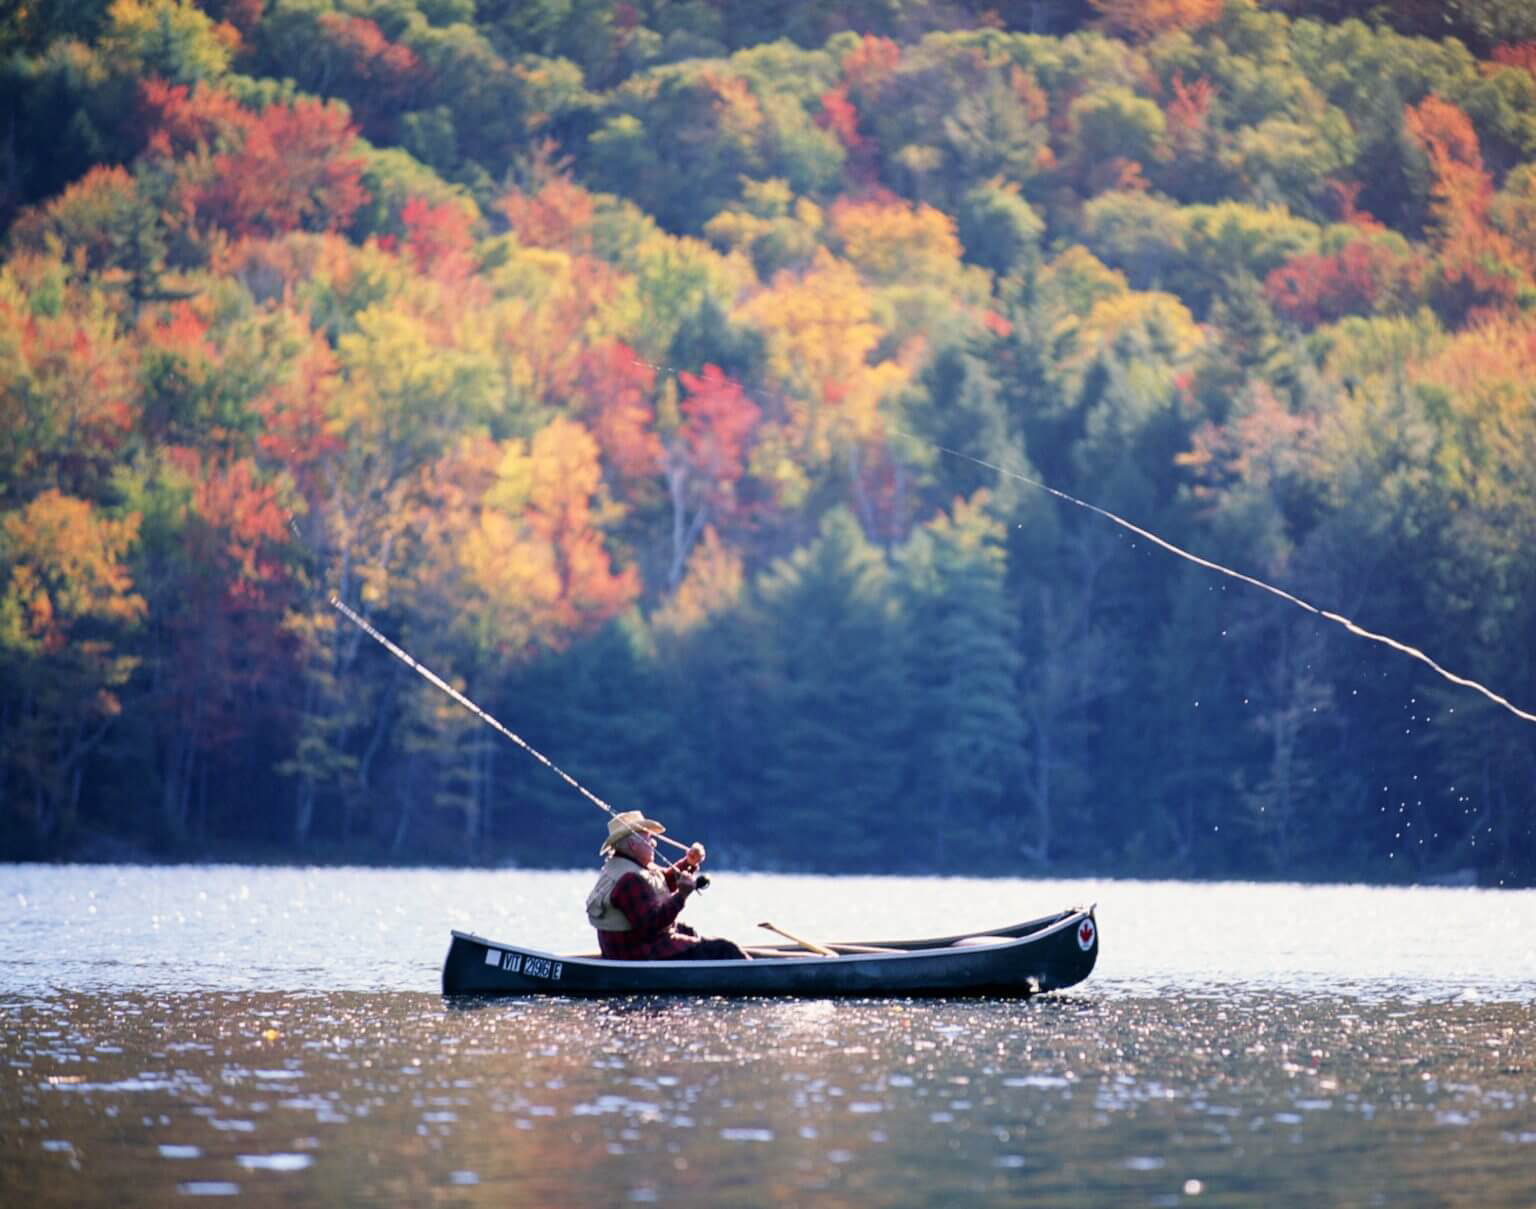 An elderly man in straw hat fishing in a canoe on a calm lake.